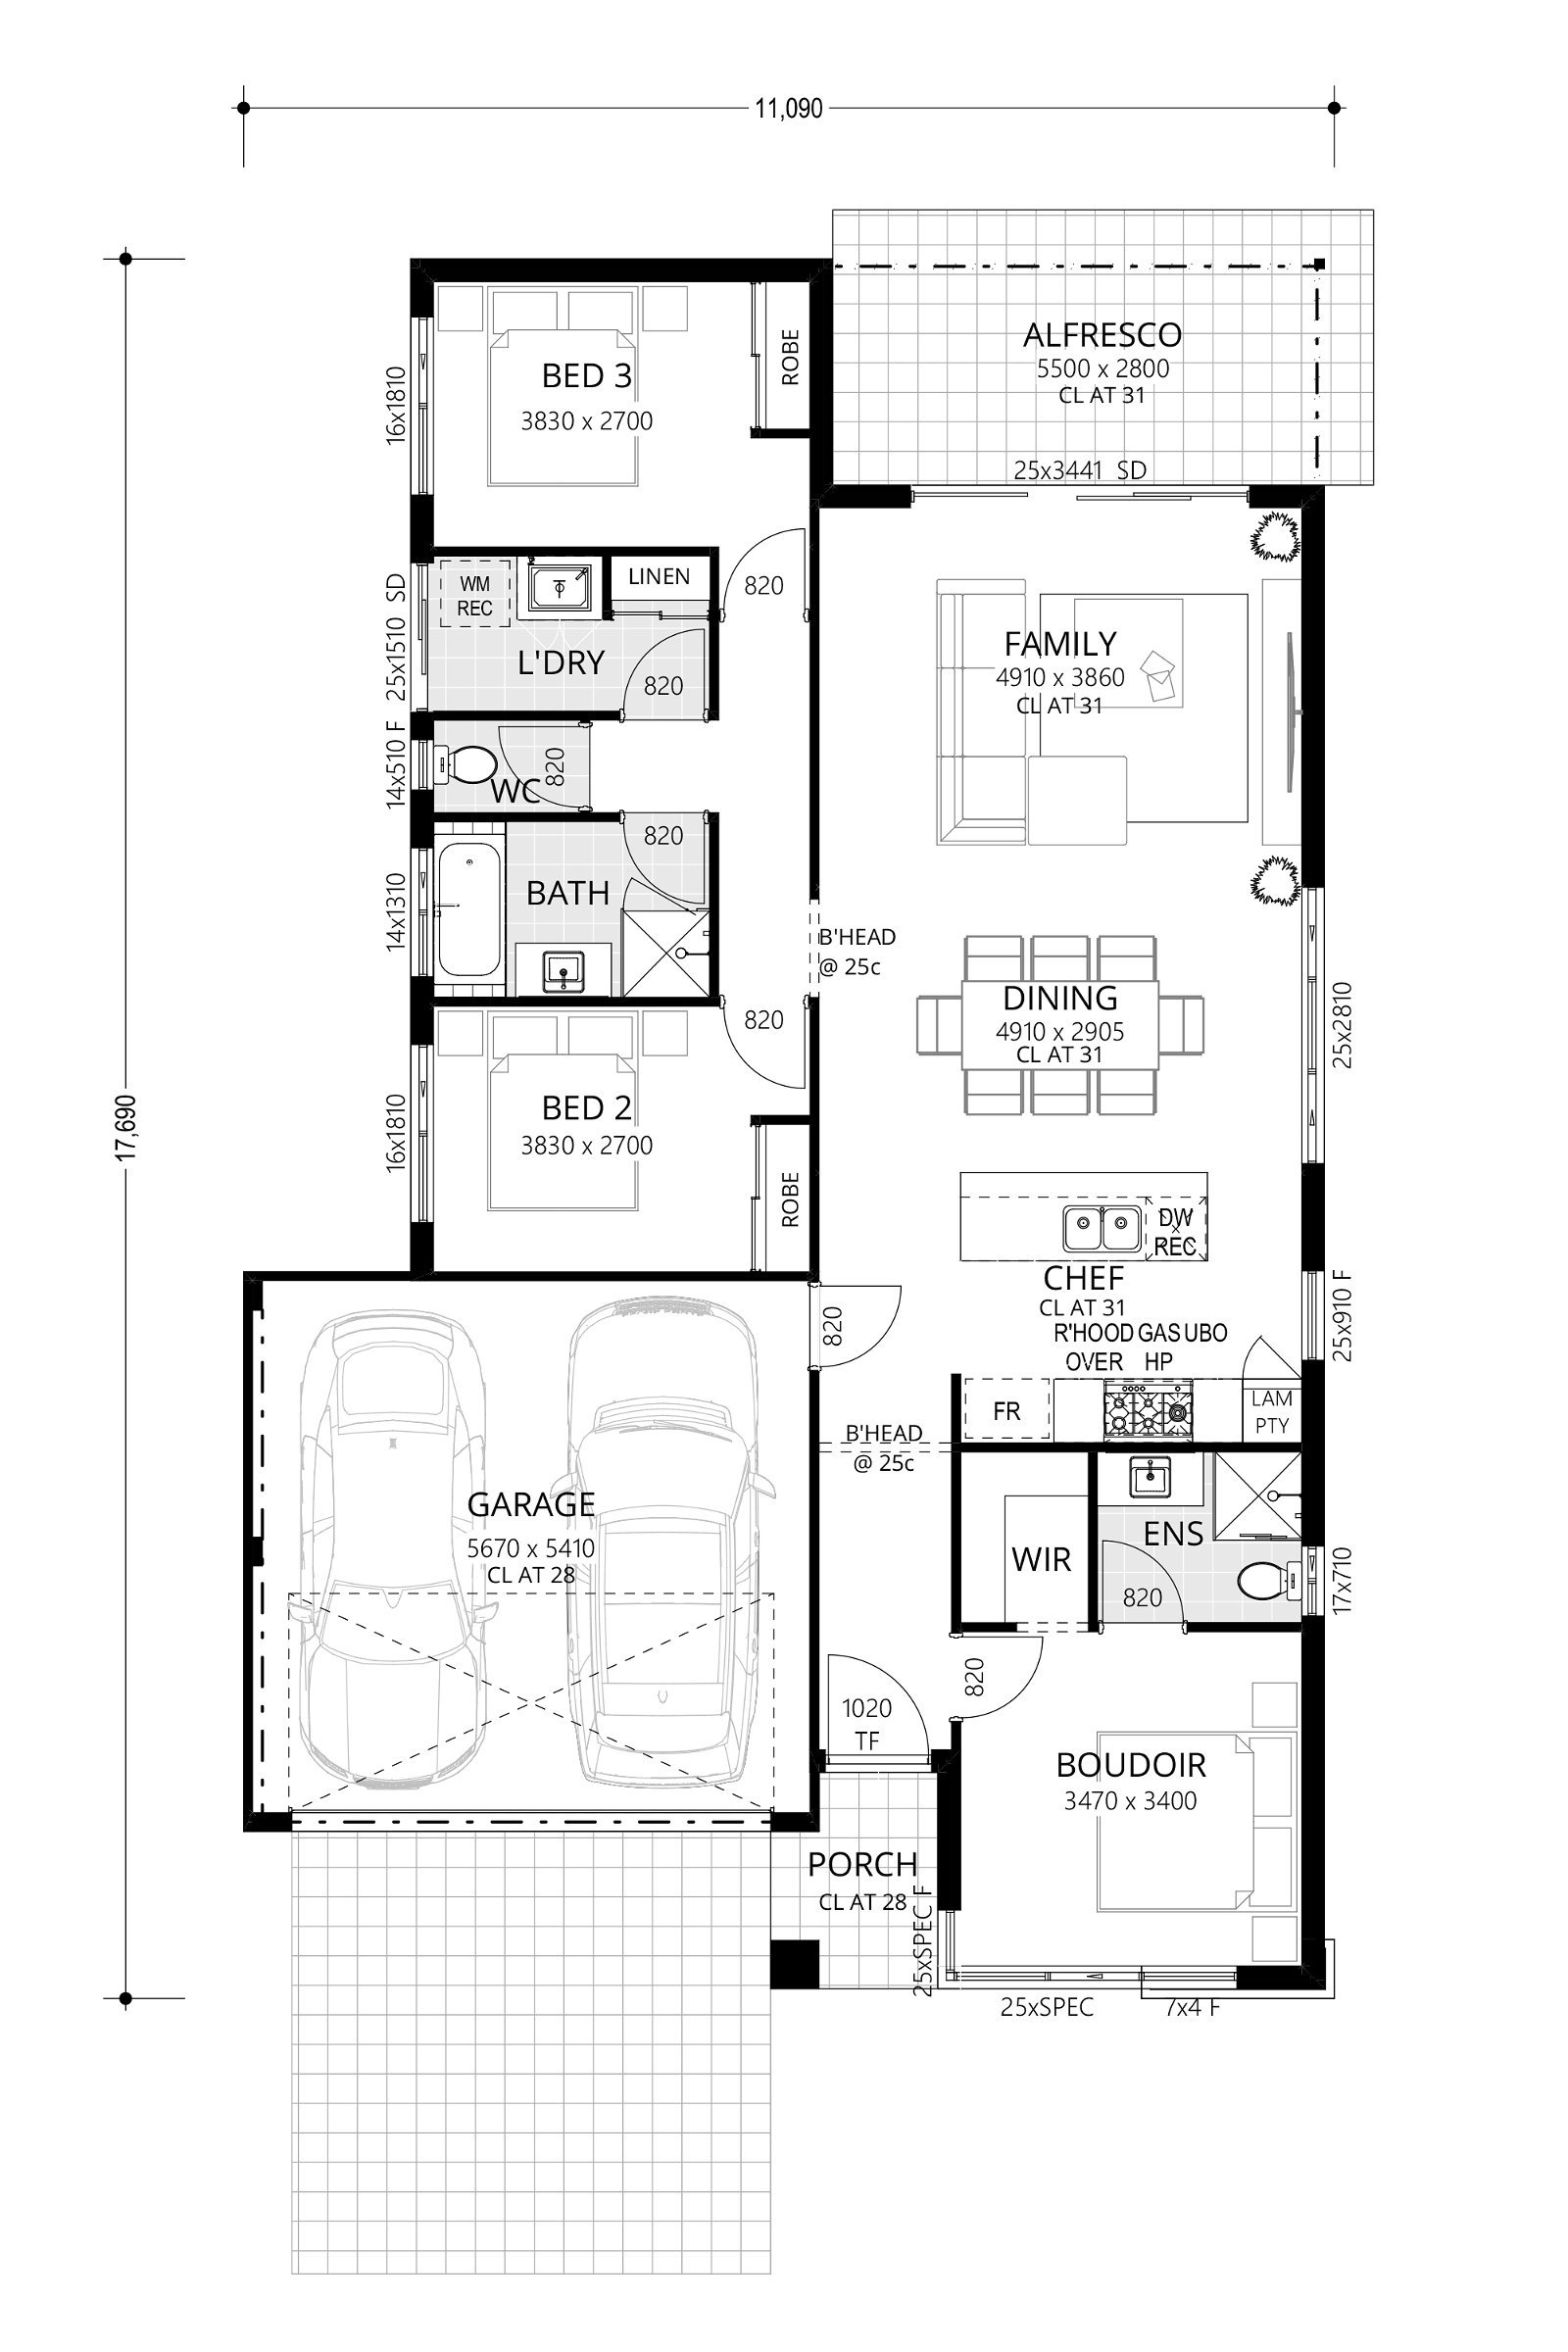 Residential Attitudes - Clever Trevor - Floorplan - Clever Trevor Floorplan Website